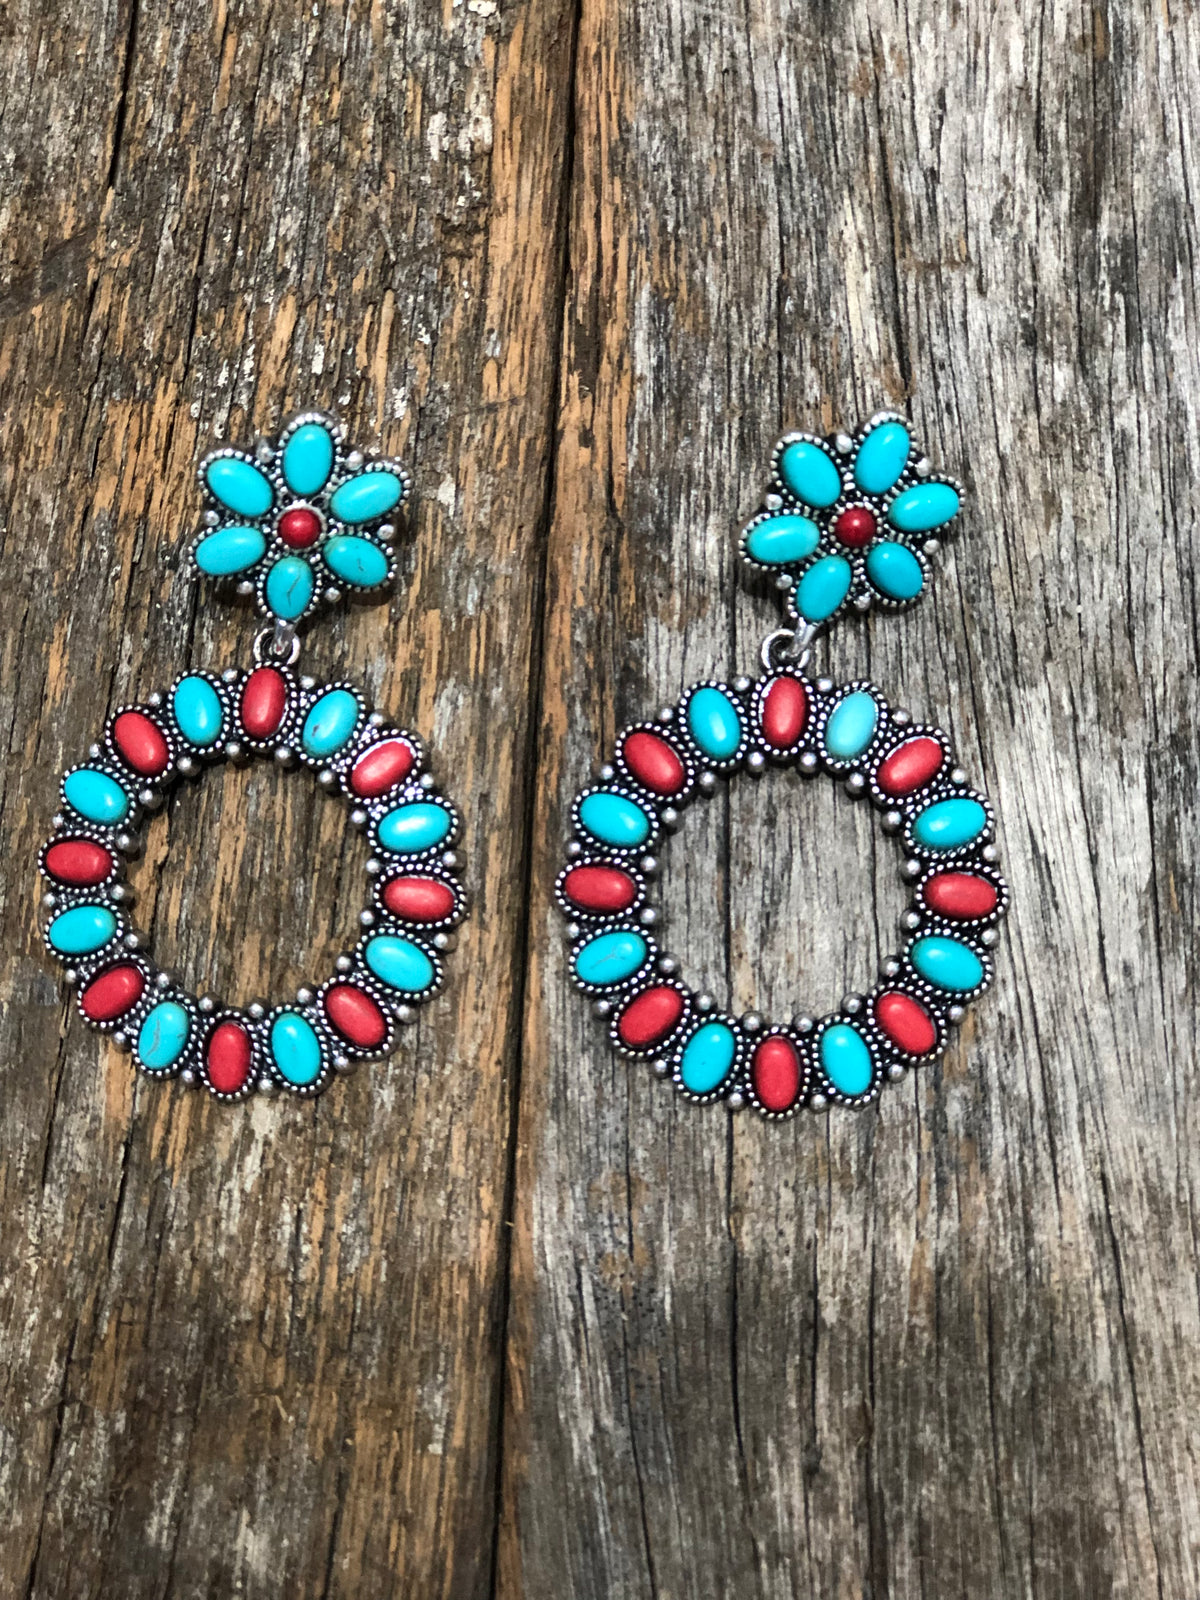 Western Earrings - Red and Turquoise Star Hoop